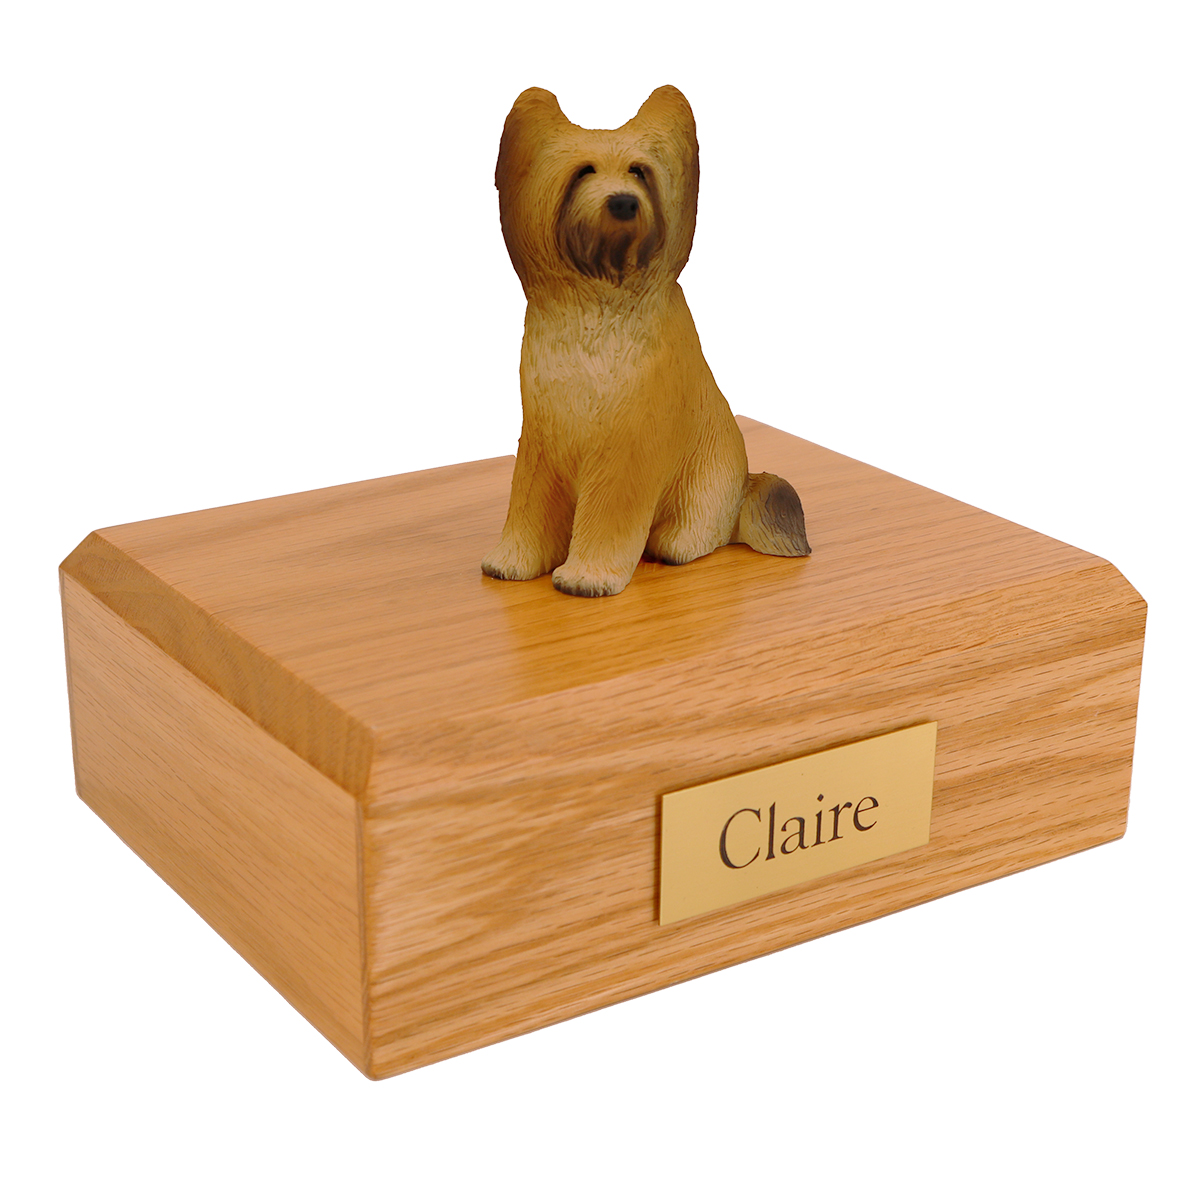 Dog, Briard - Figurine Urn